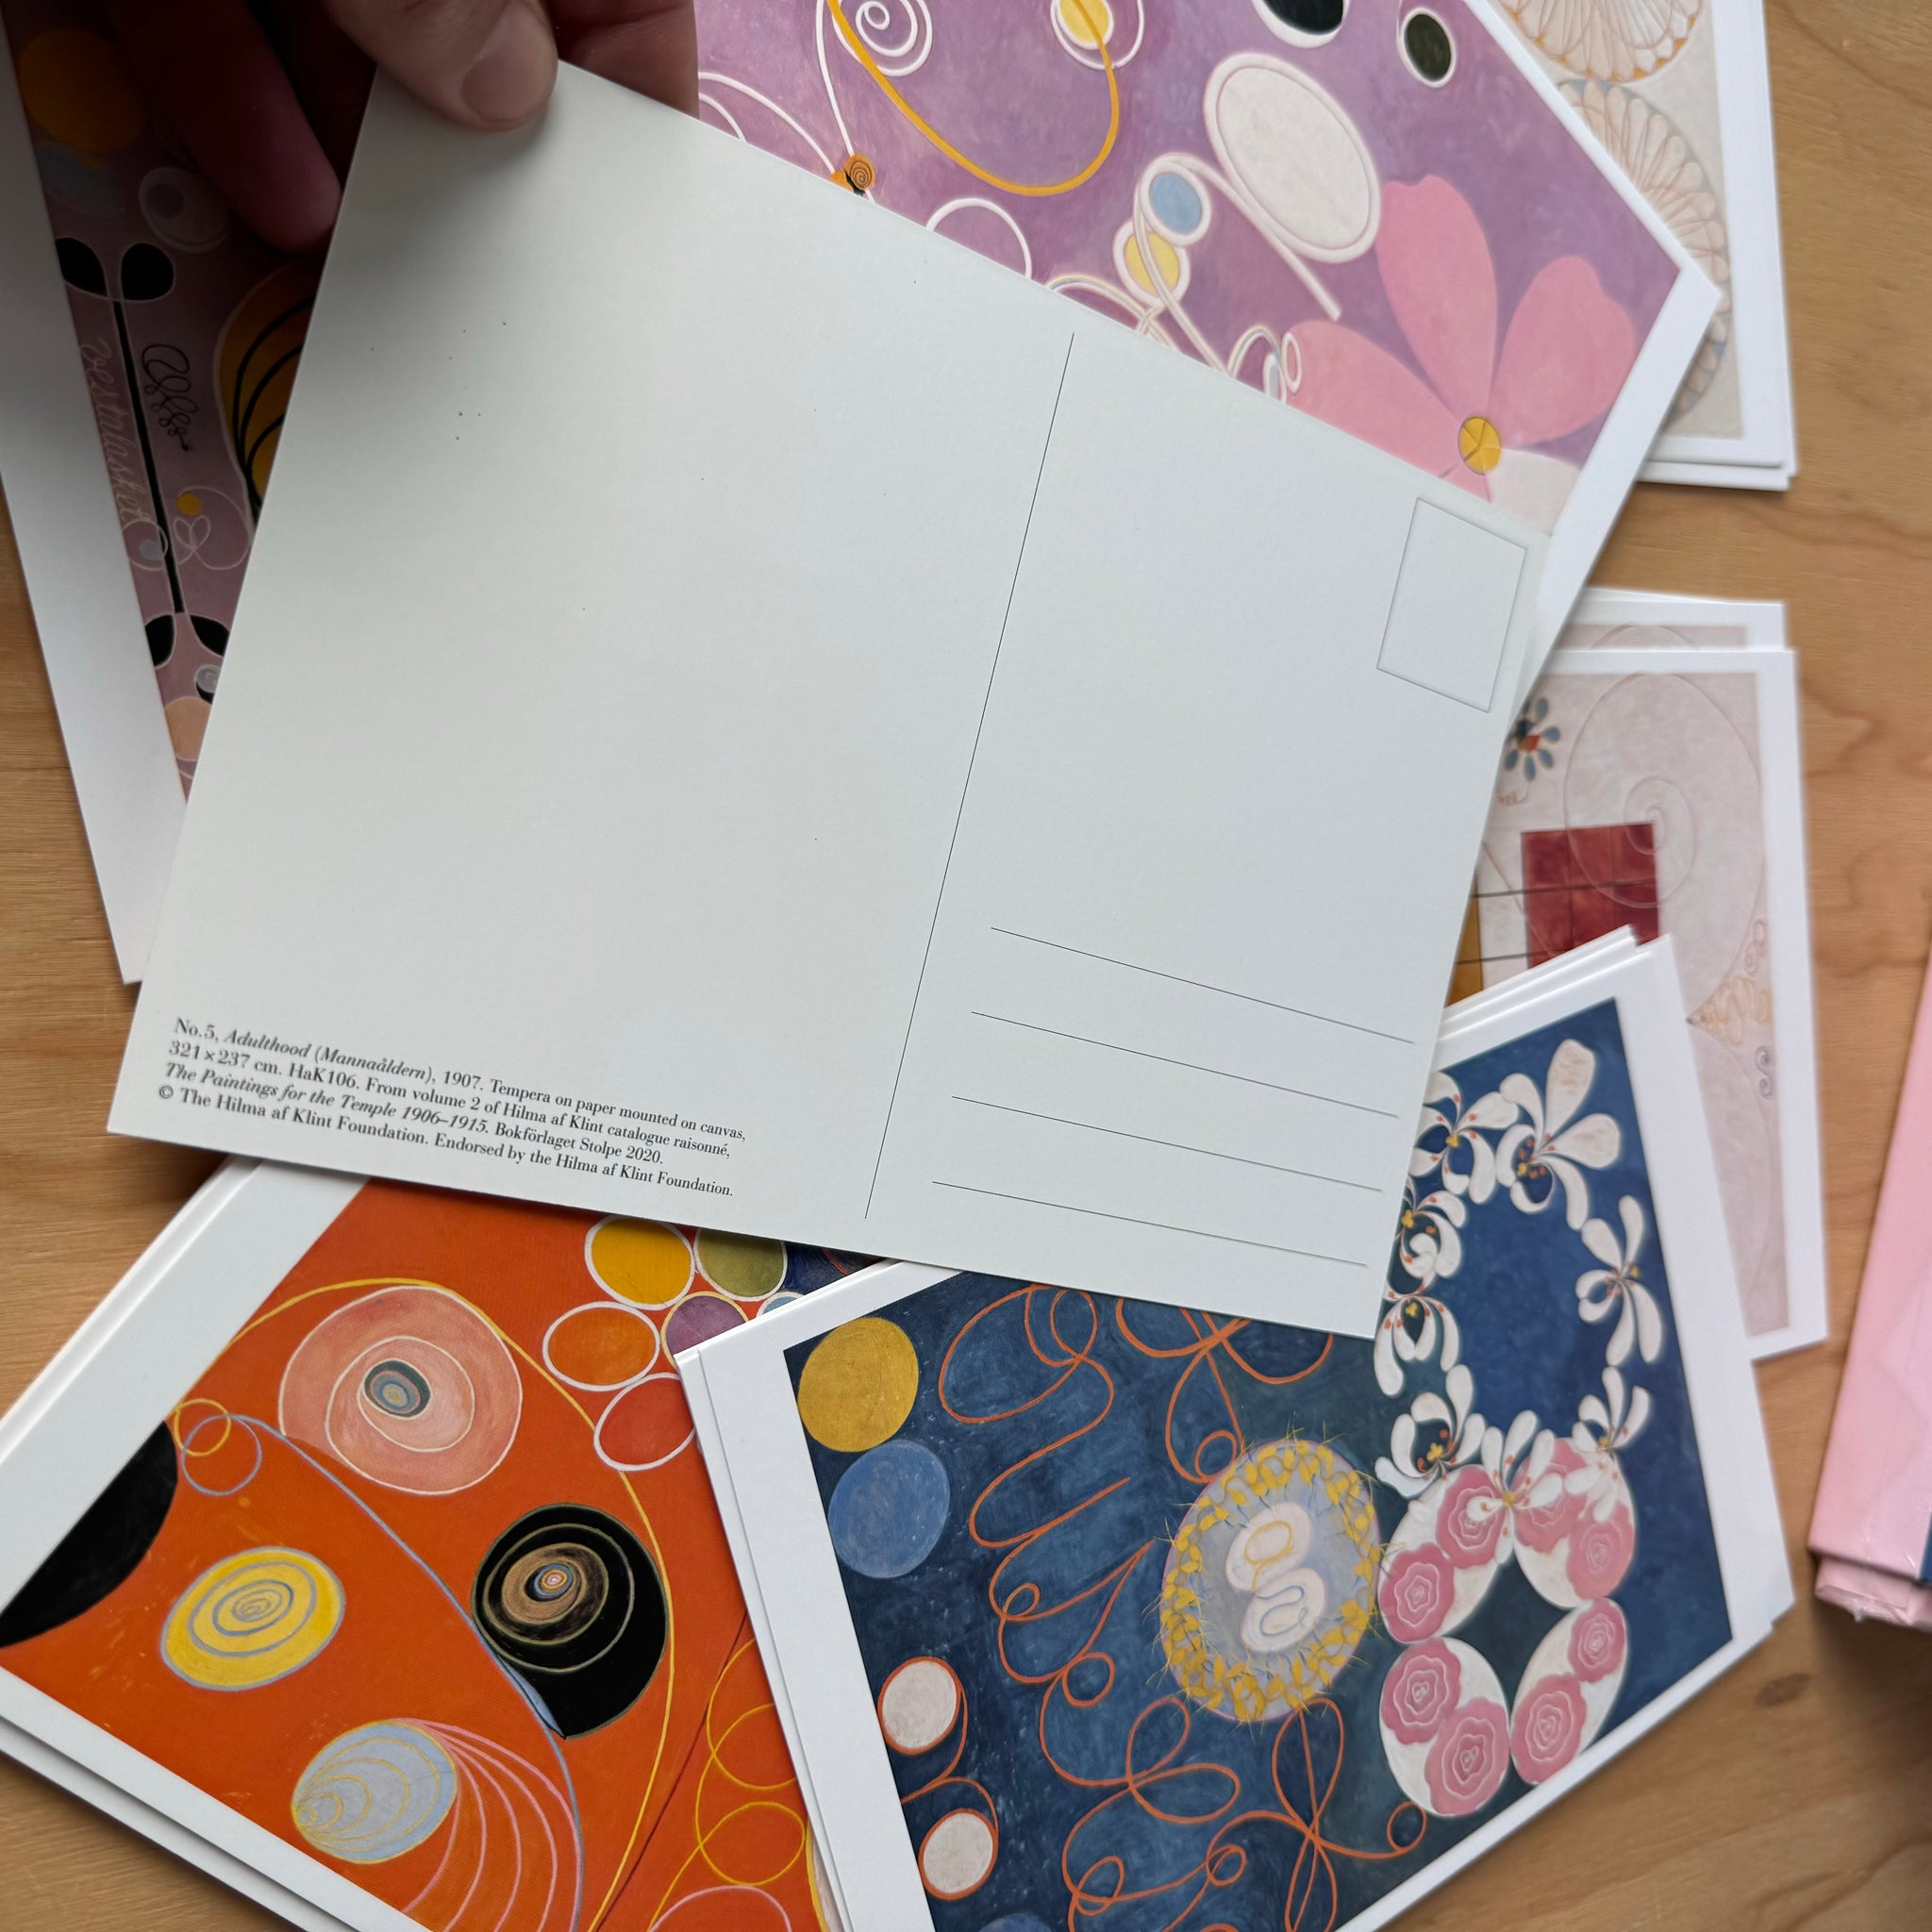 Hilma af Klint: The Ten Largest Postcard Box